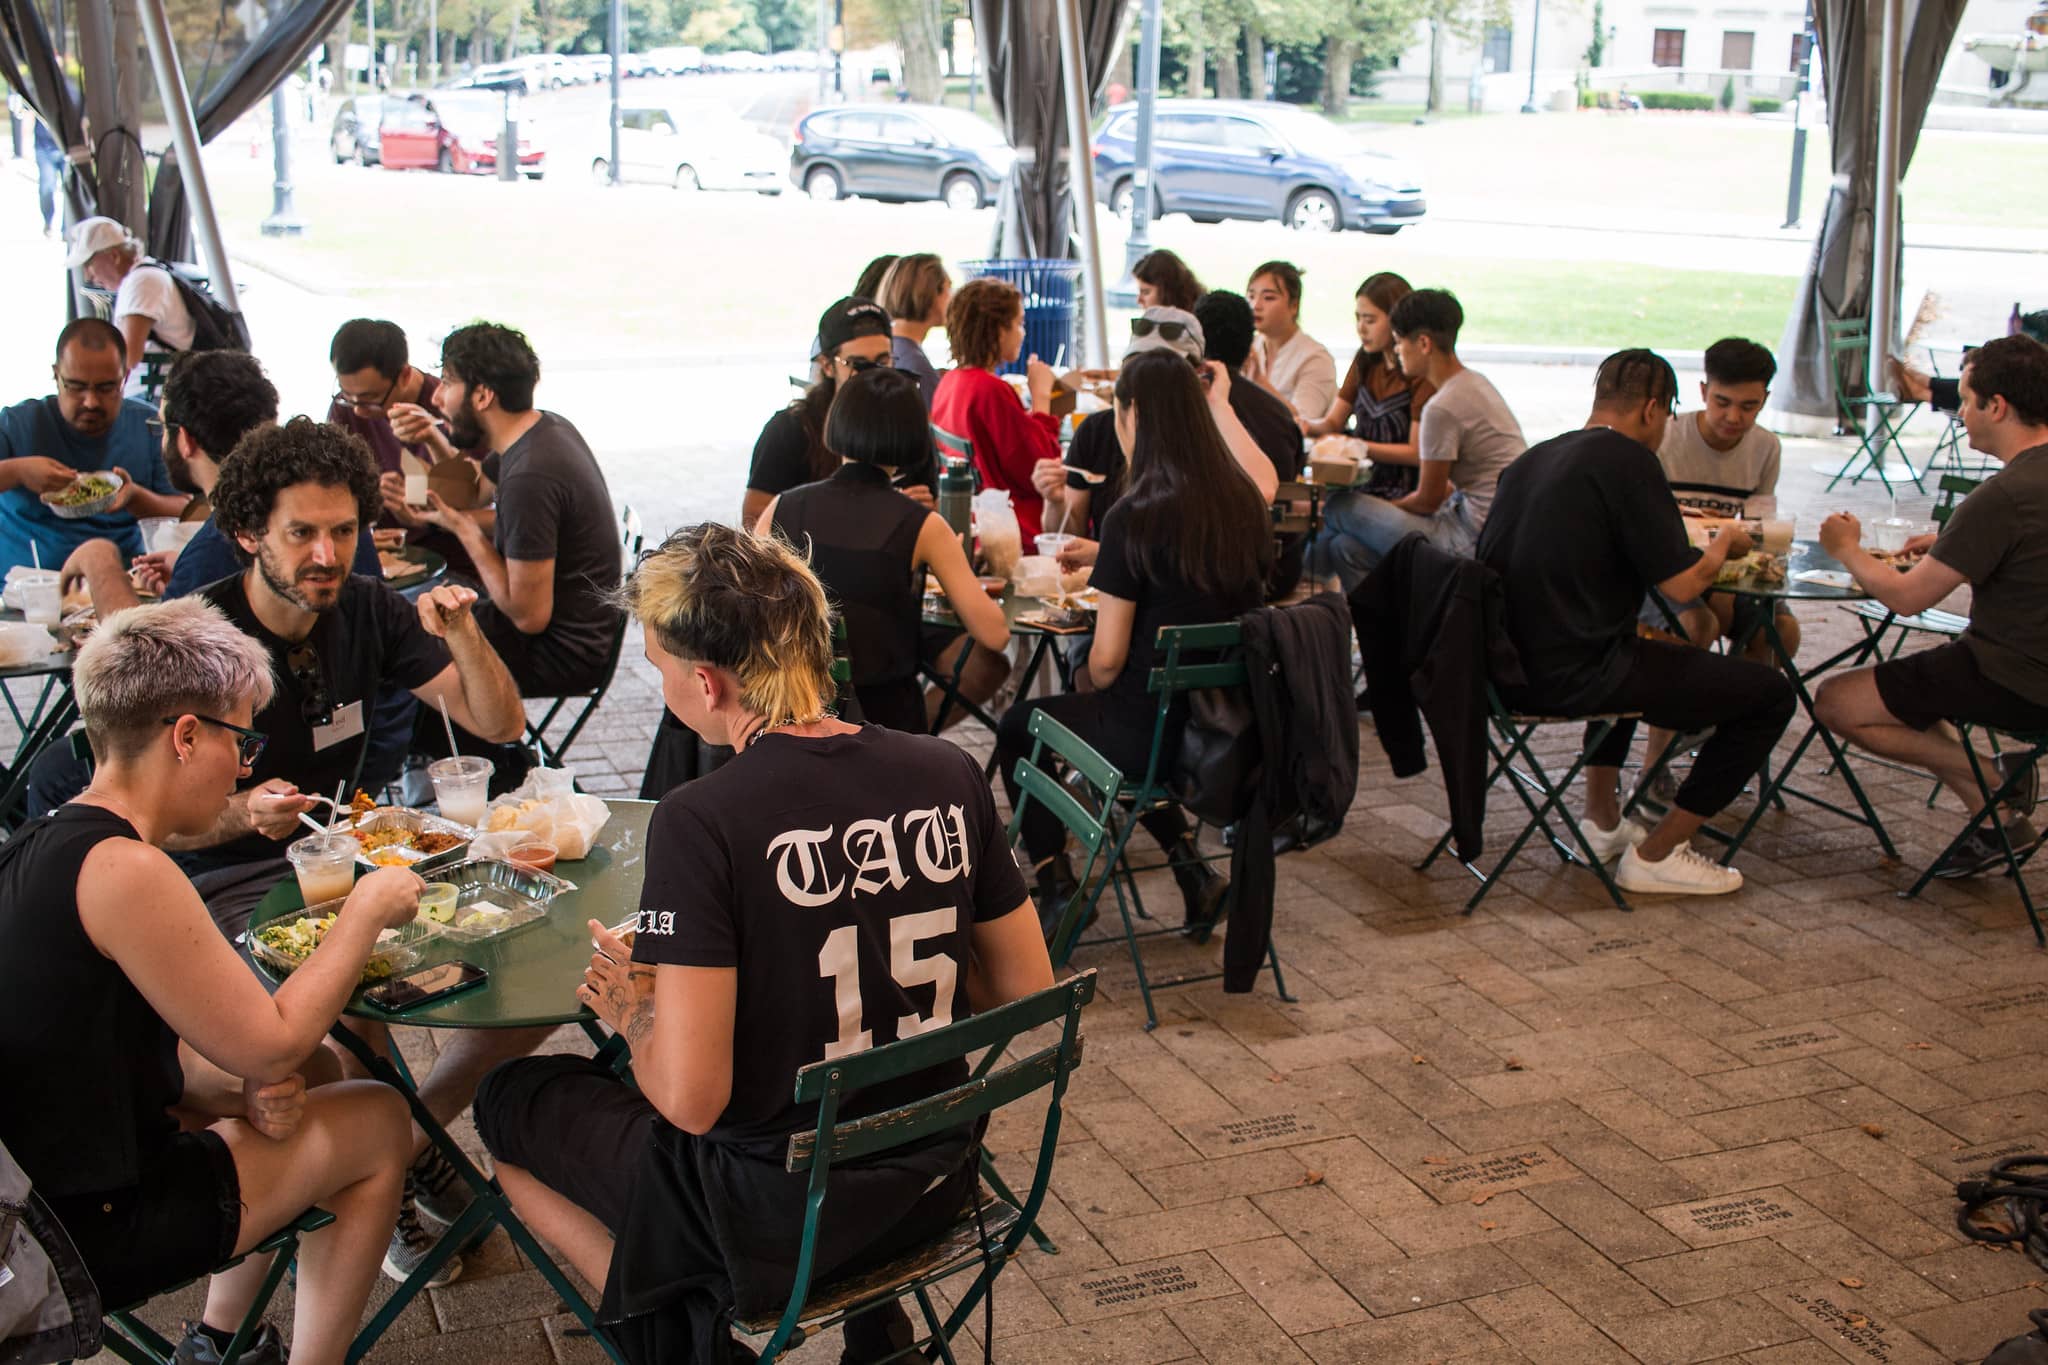 Participantes almorzando juntos sentados al aire libre"